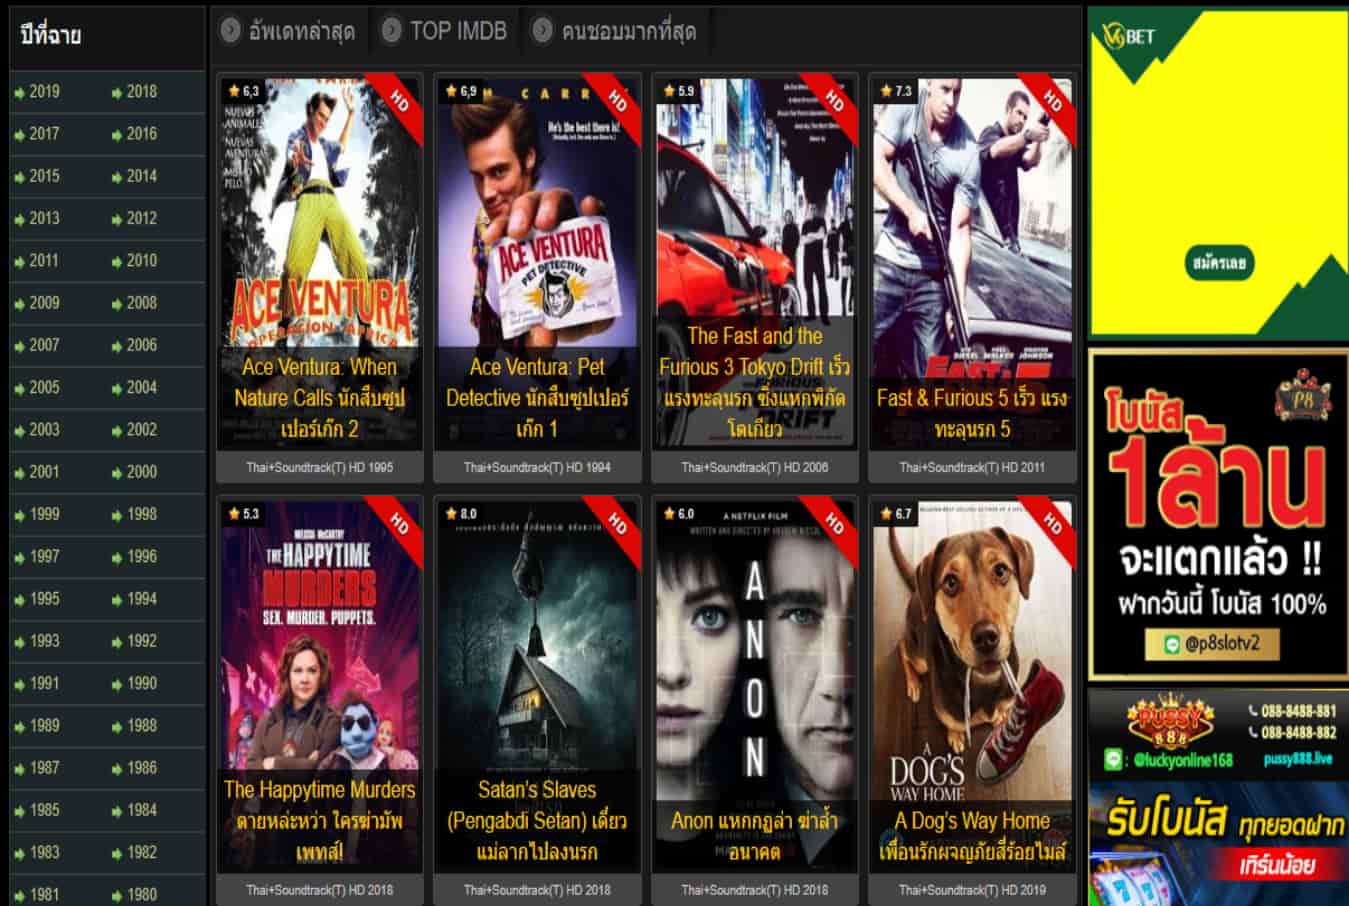 Popular Pirate Movie Website Movie2freecom Shut Down